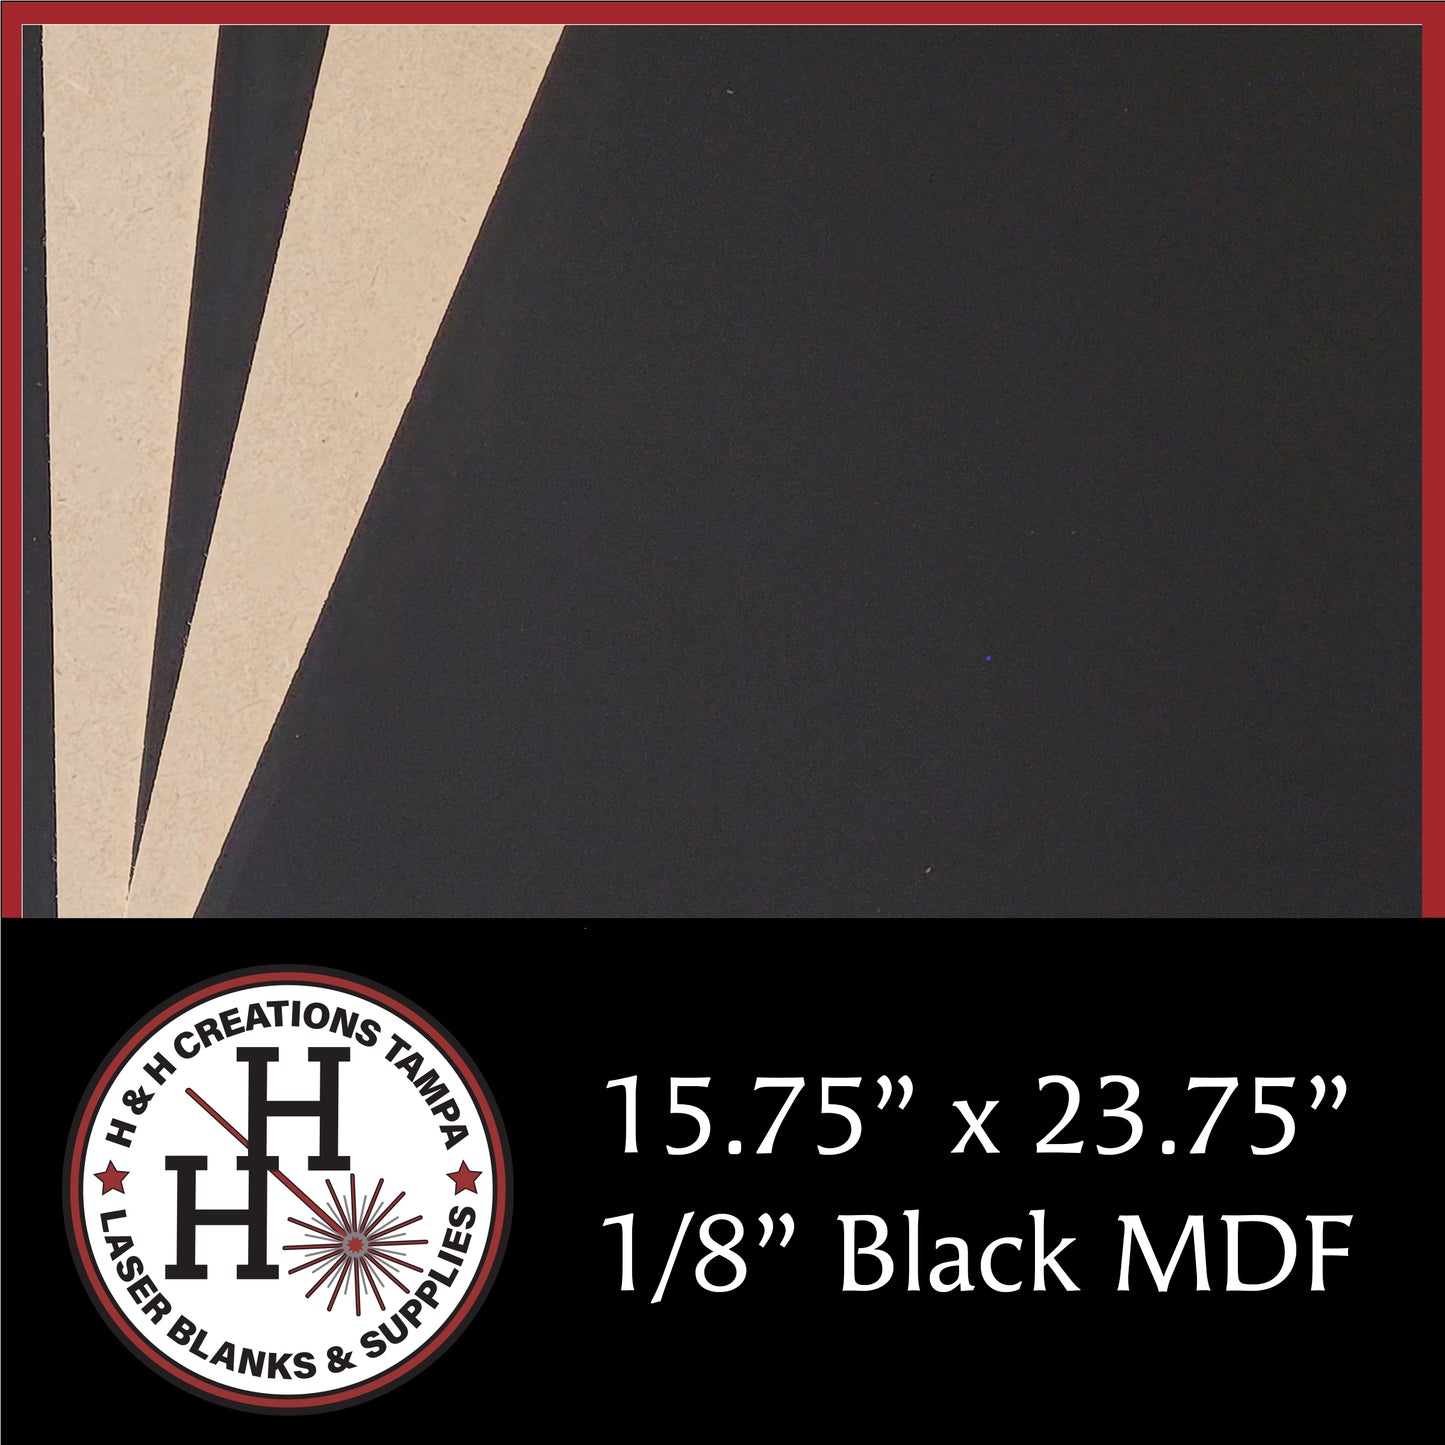 1/8" Premium Black Single-Sided MDF Draft Board 15.75" x 23.75"